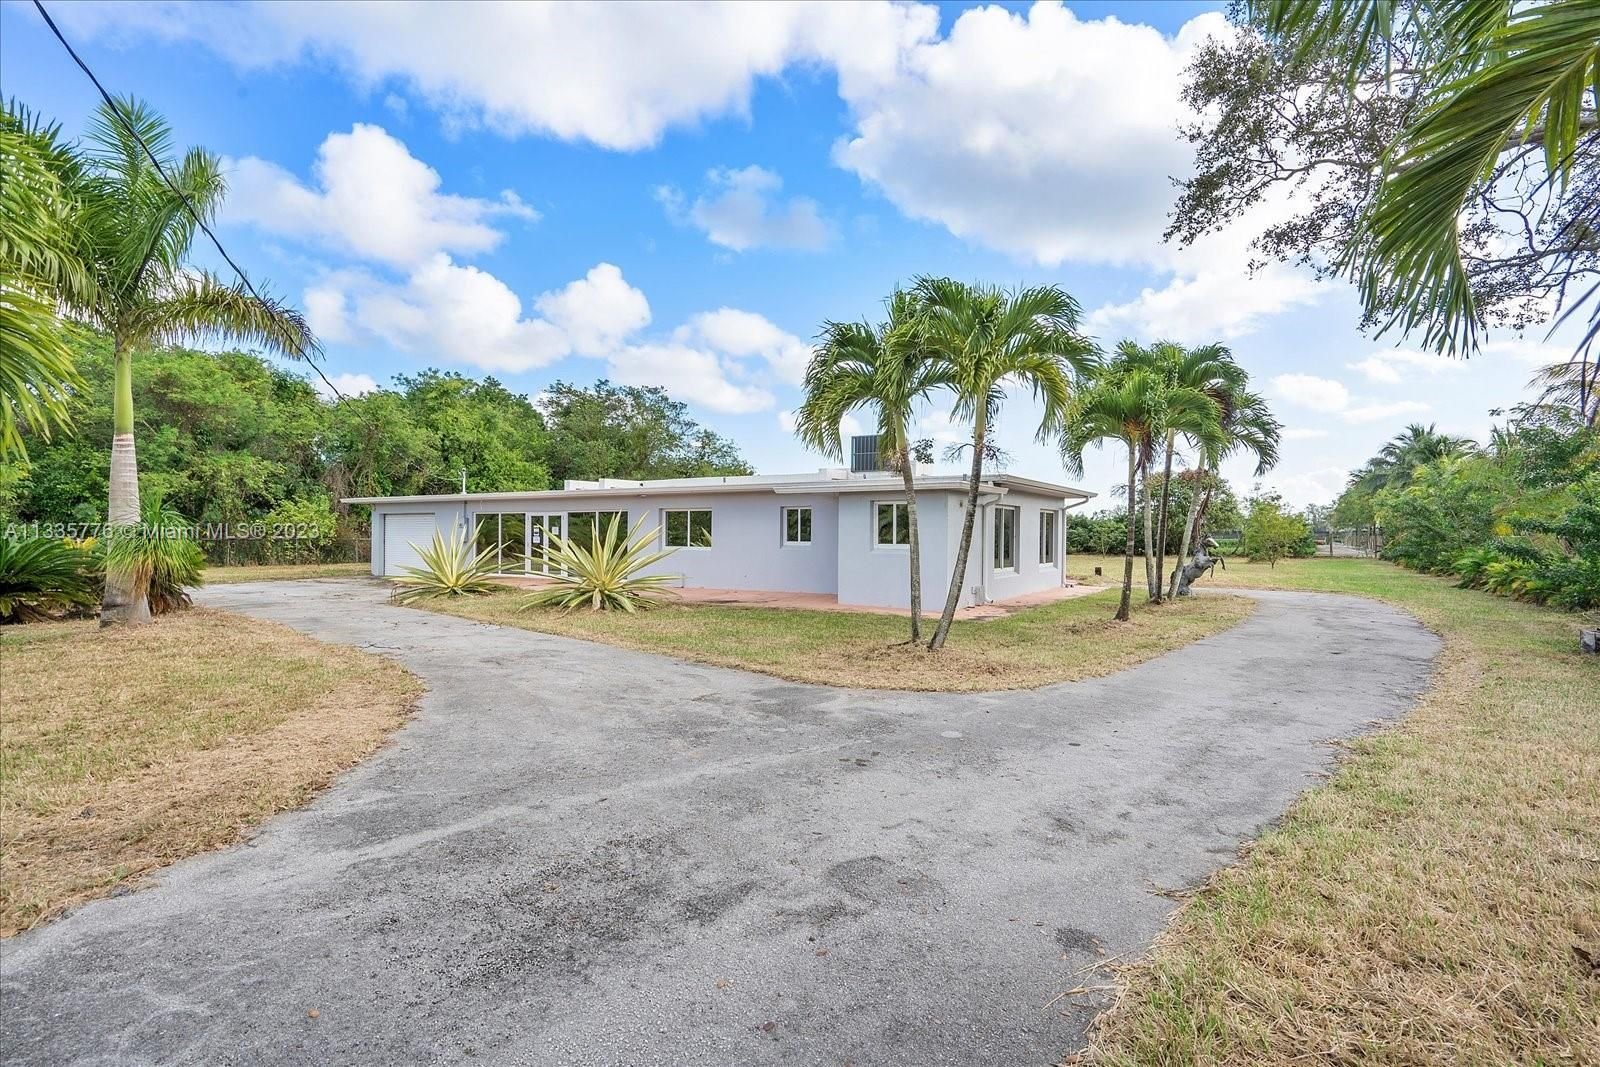 Real estate property located at 21701 147th Ave, Miami-Dade County, Miami, FL